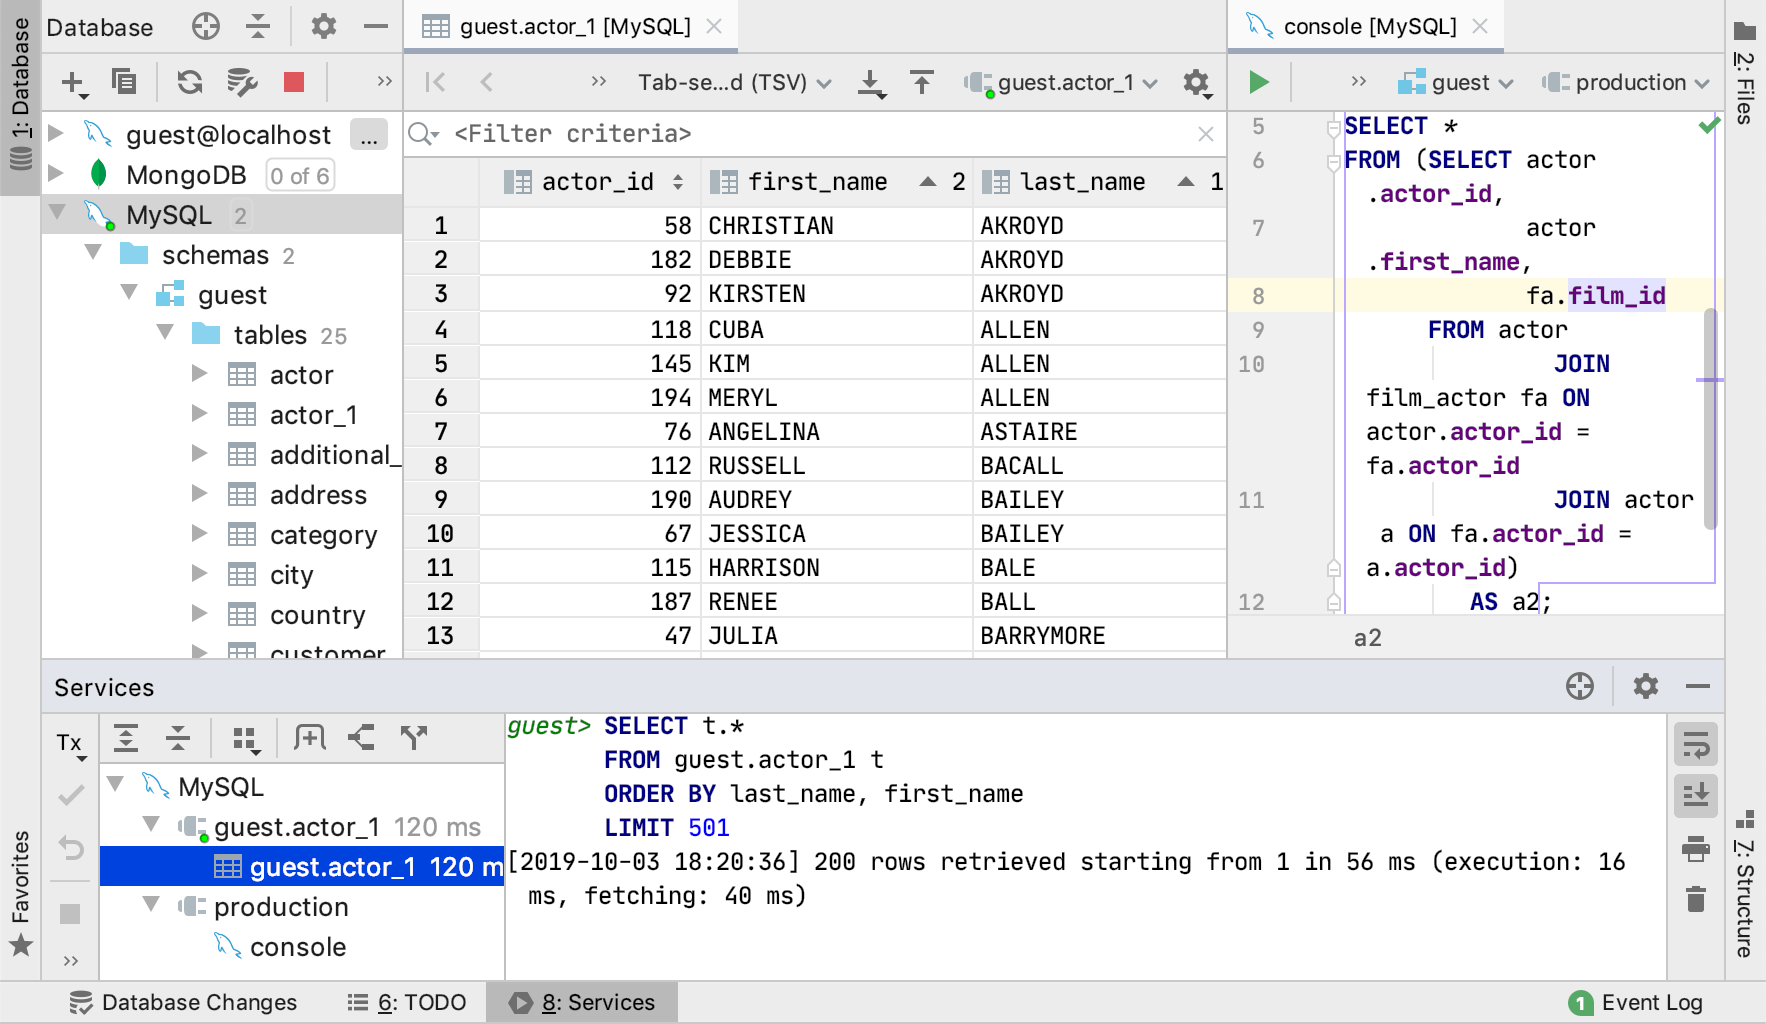 Data editor with tool windows